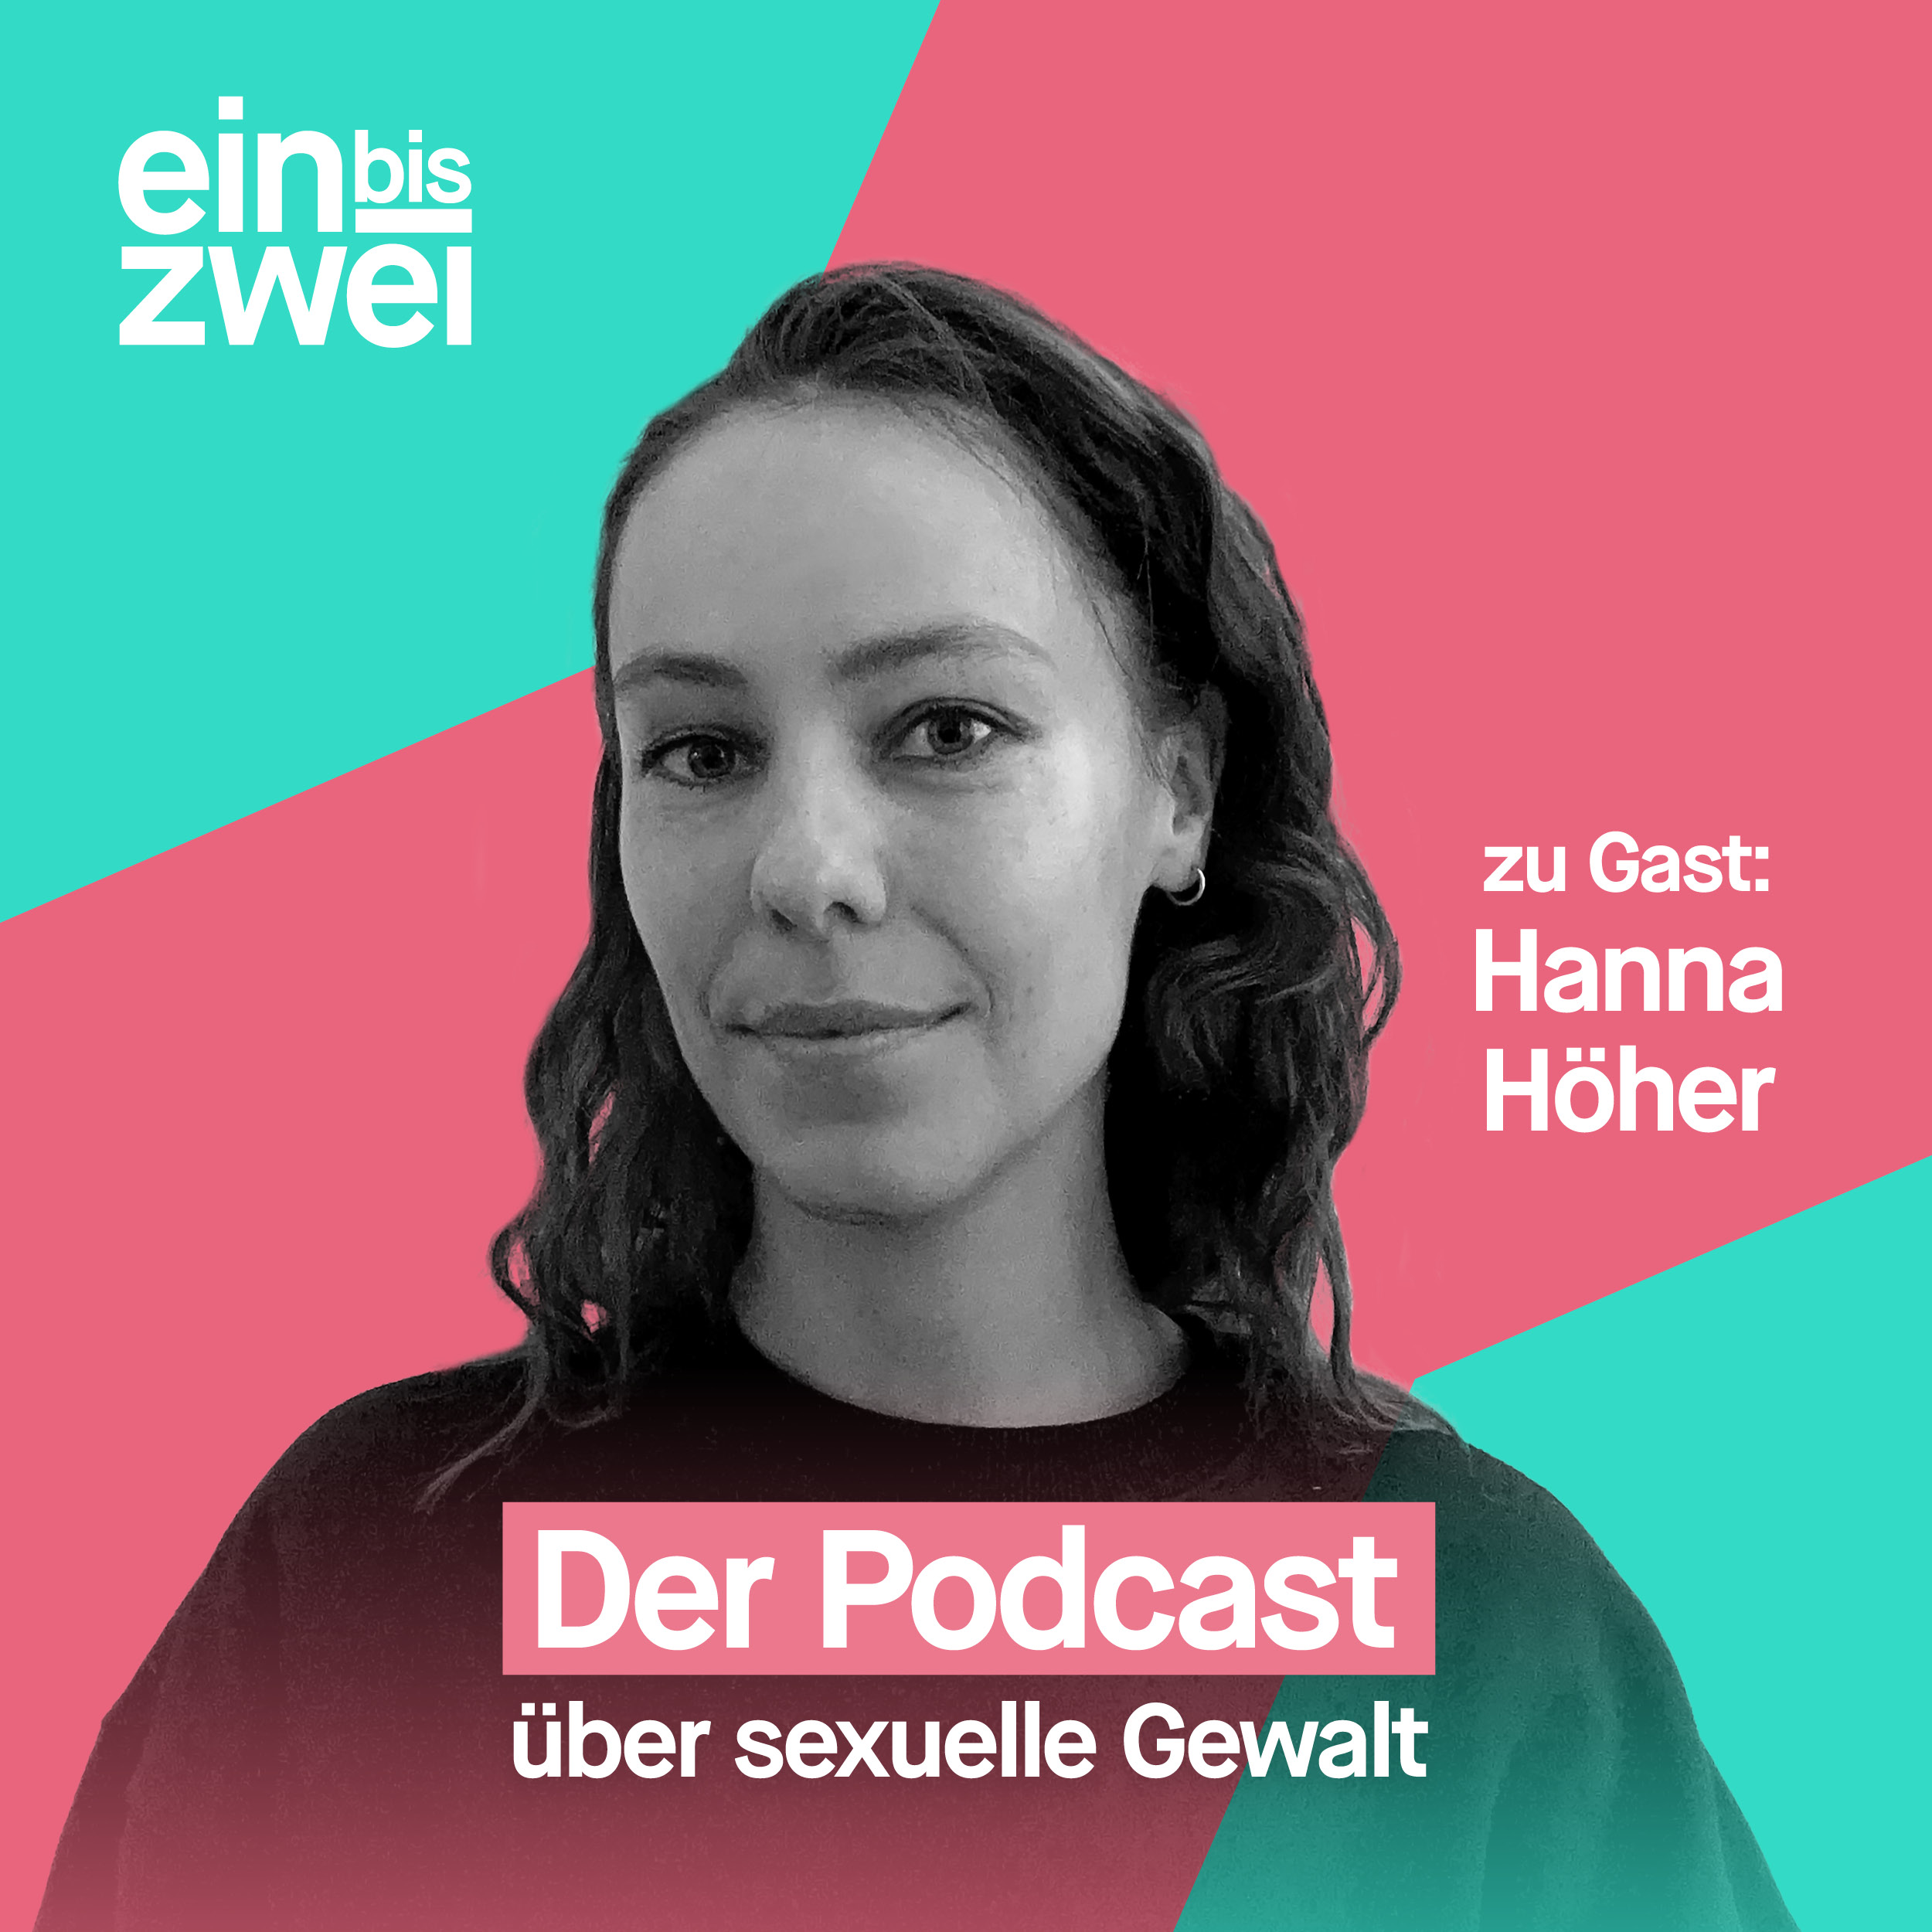 Hanna Höher